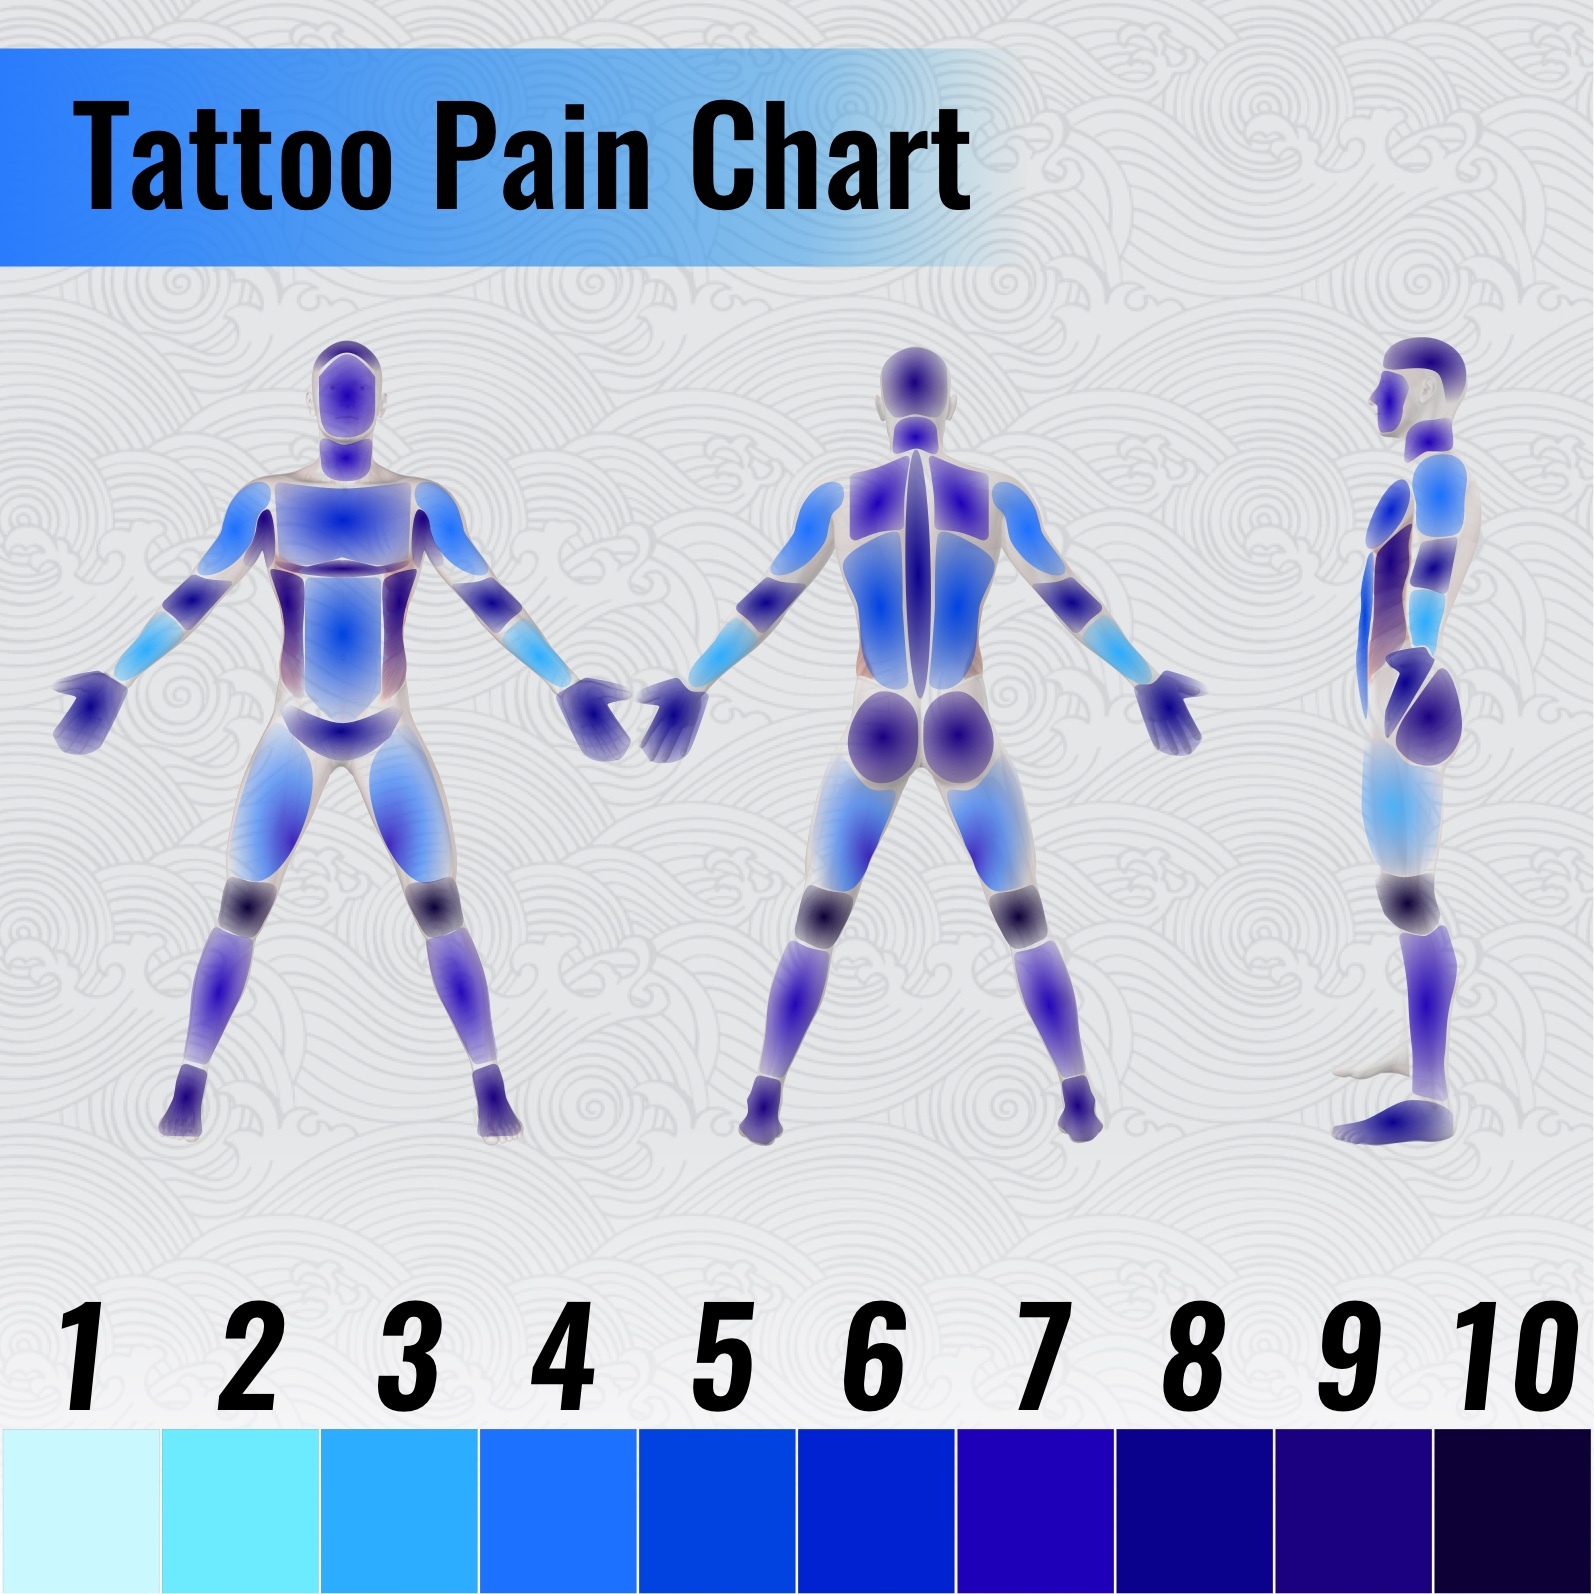 How much do shoulder blade tattoos hurt